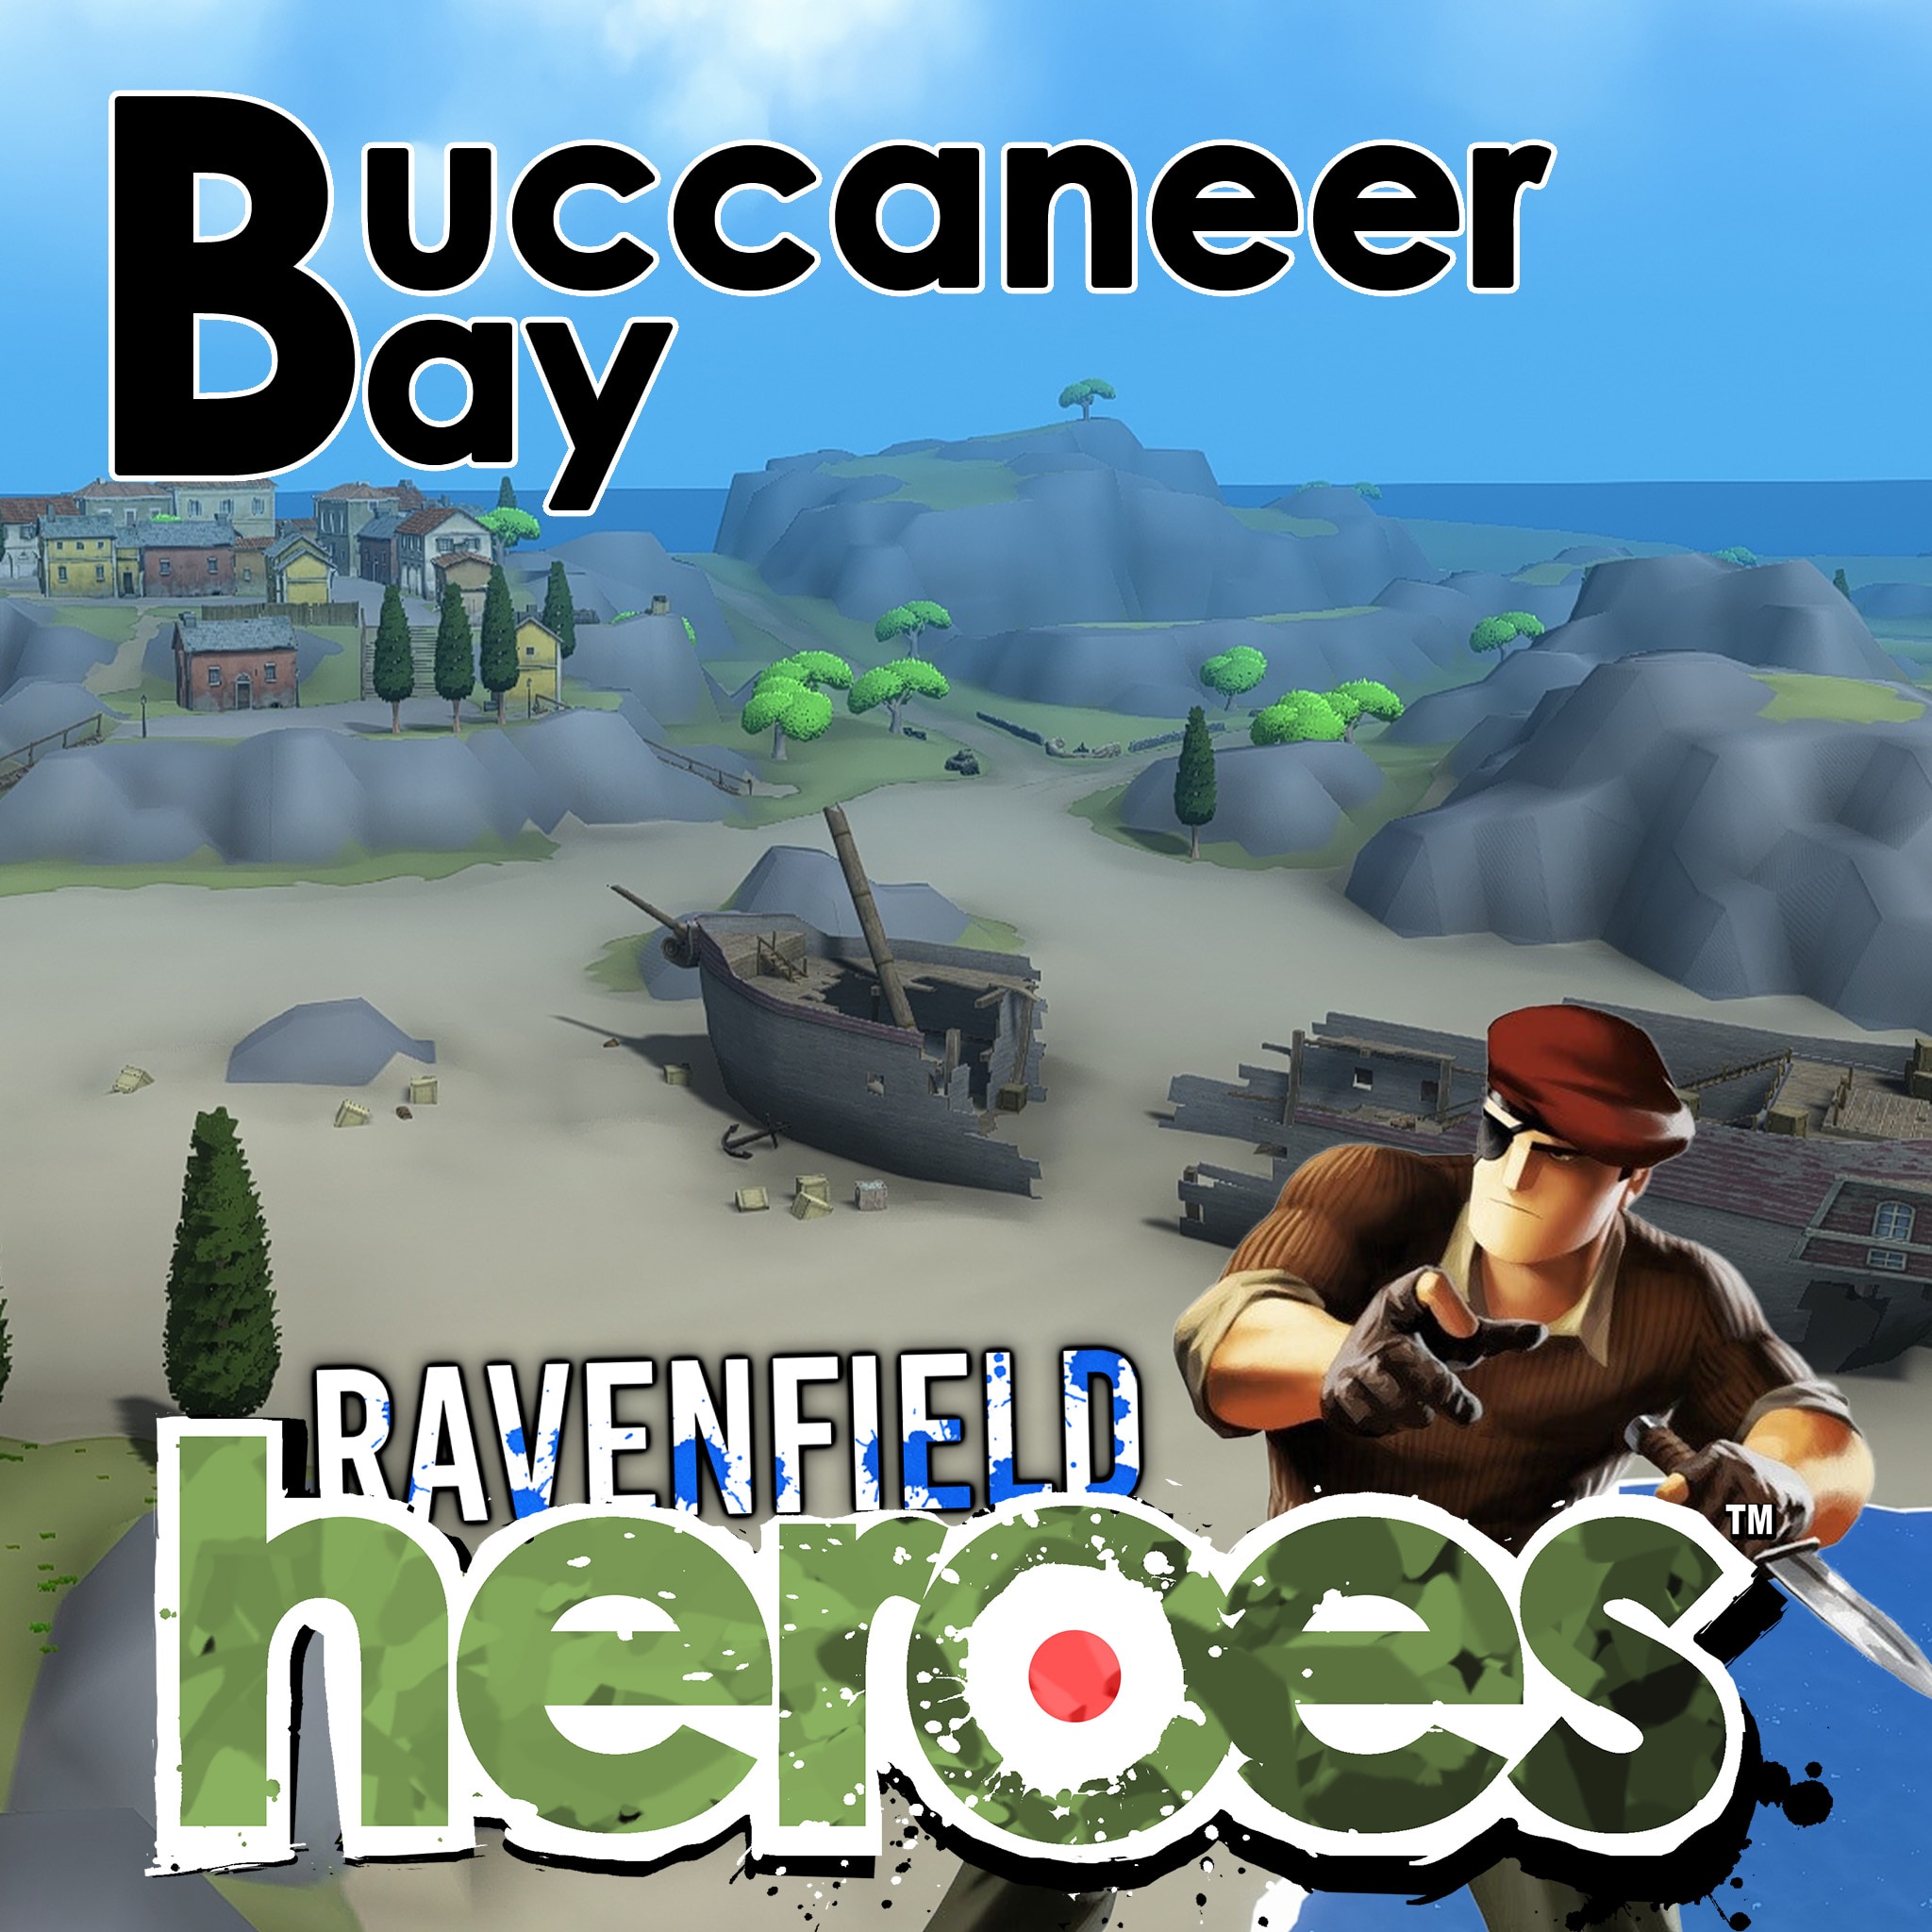 battlefield heroes background